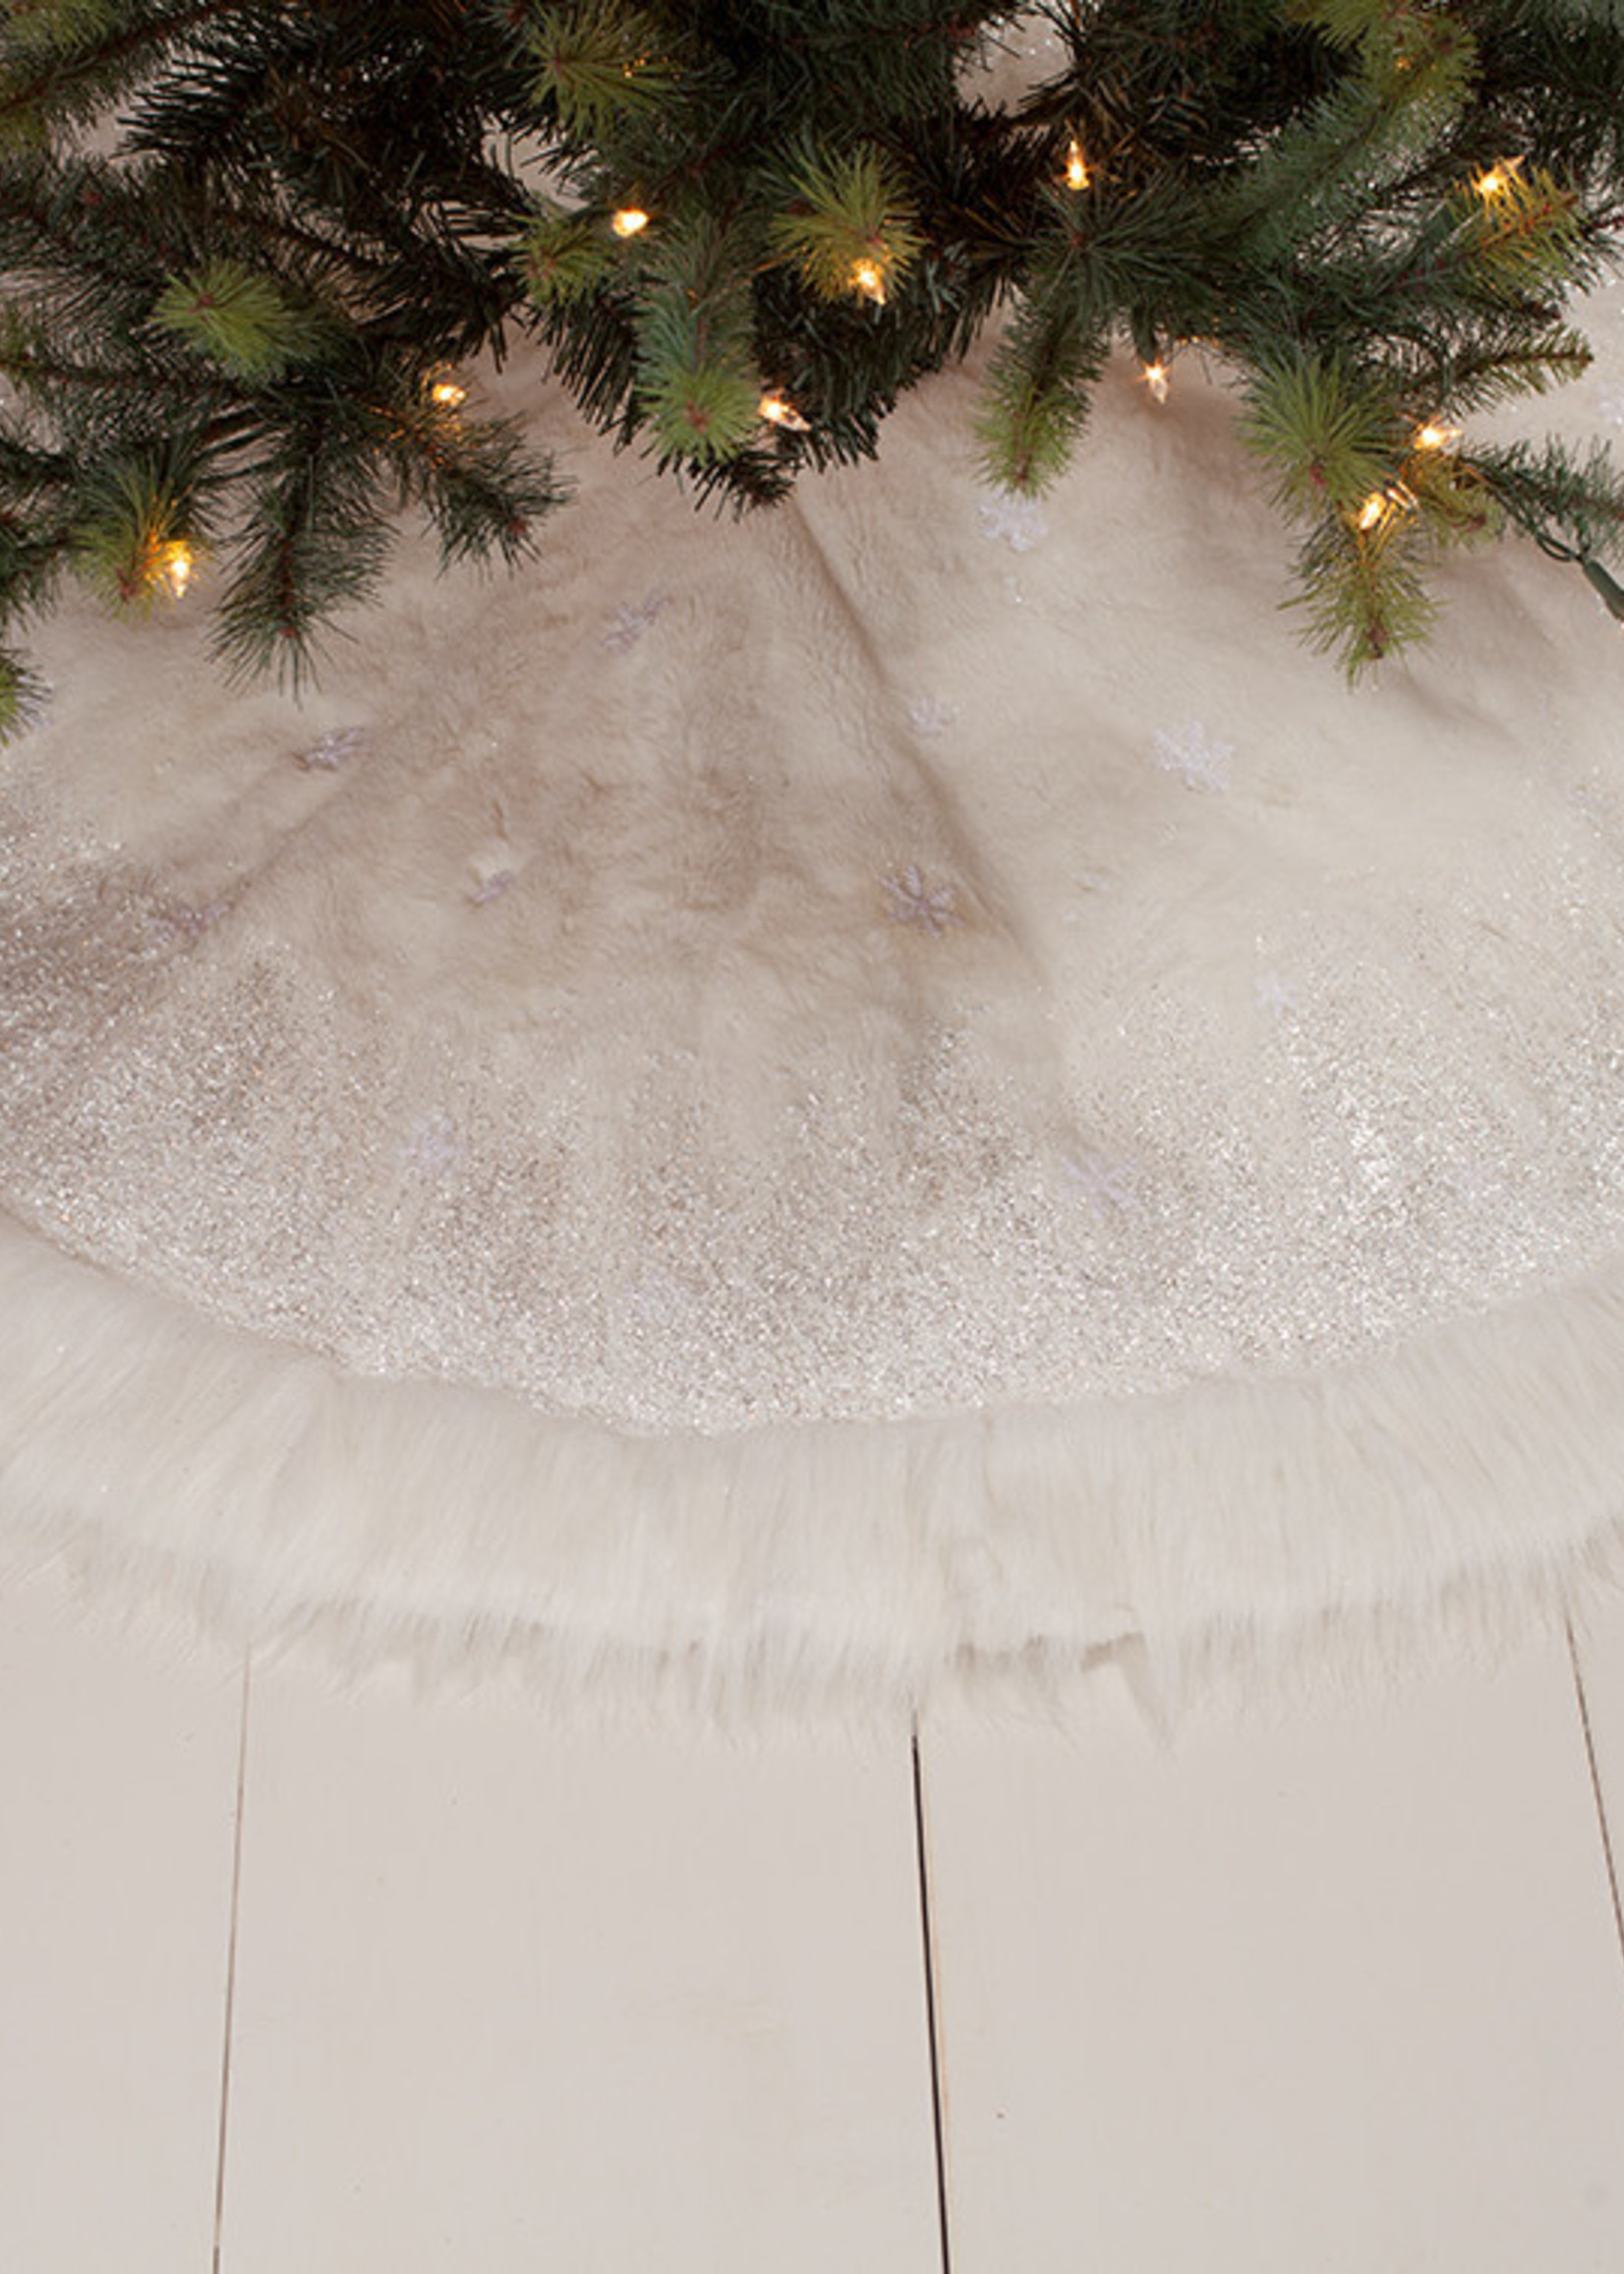 Bethany Lowe Designs Winter Snowflake Tree Skirt